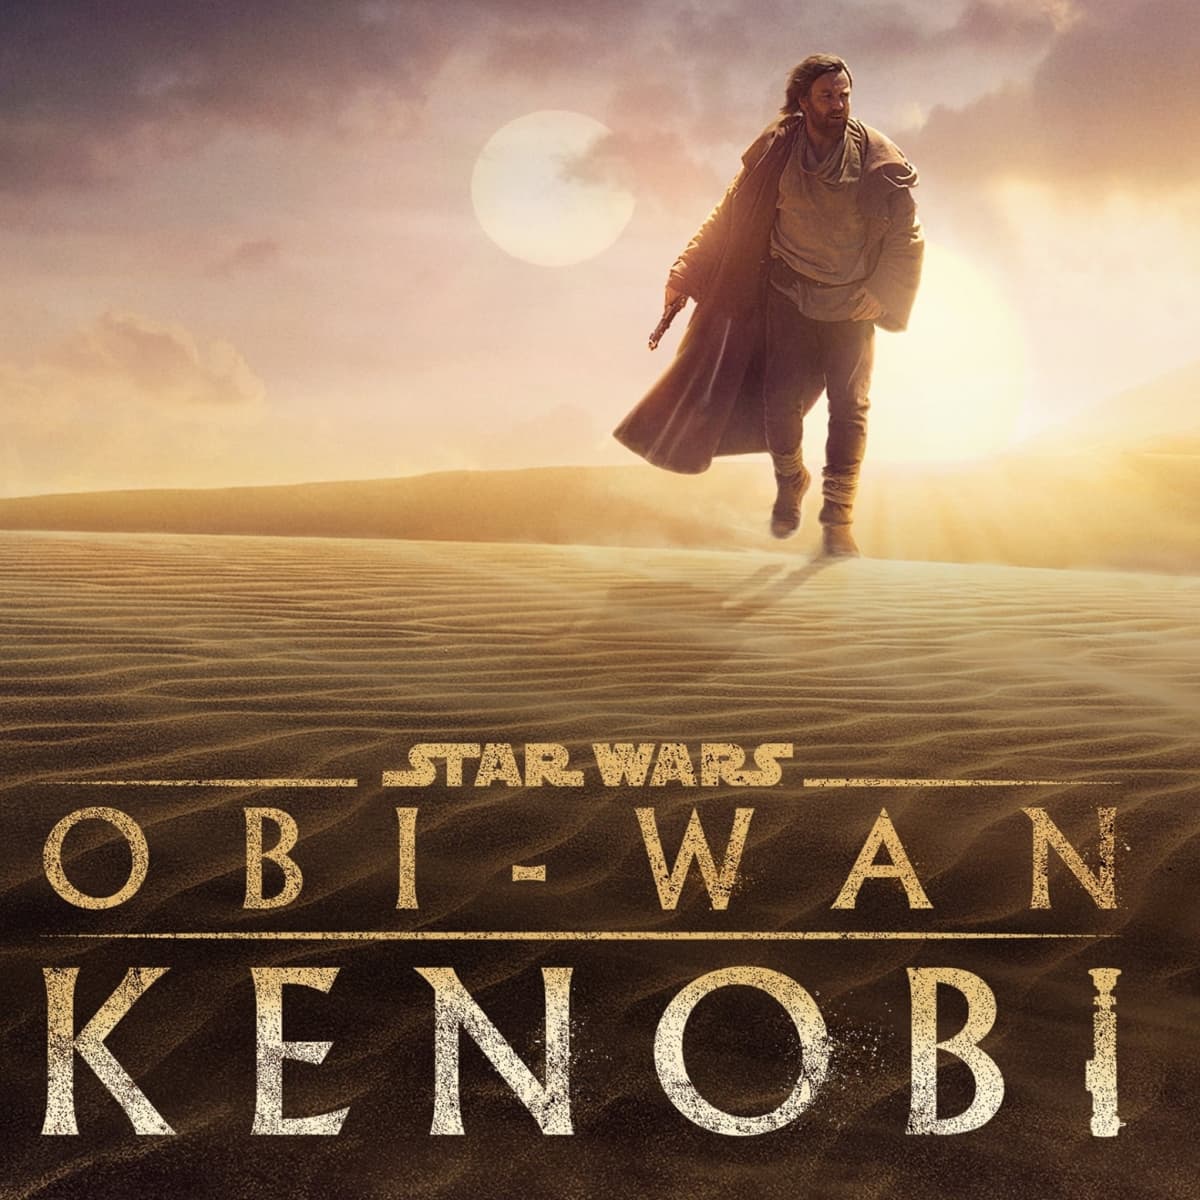 Star Wars' Backs 'Obi-Wan Kenobi's Moses Ingram as She Calls Out Racist  Attacks